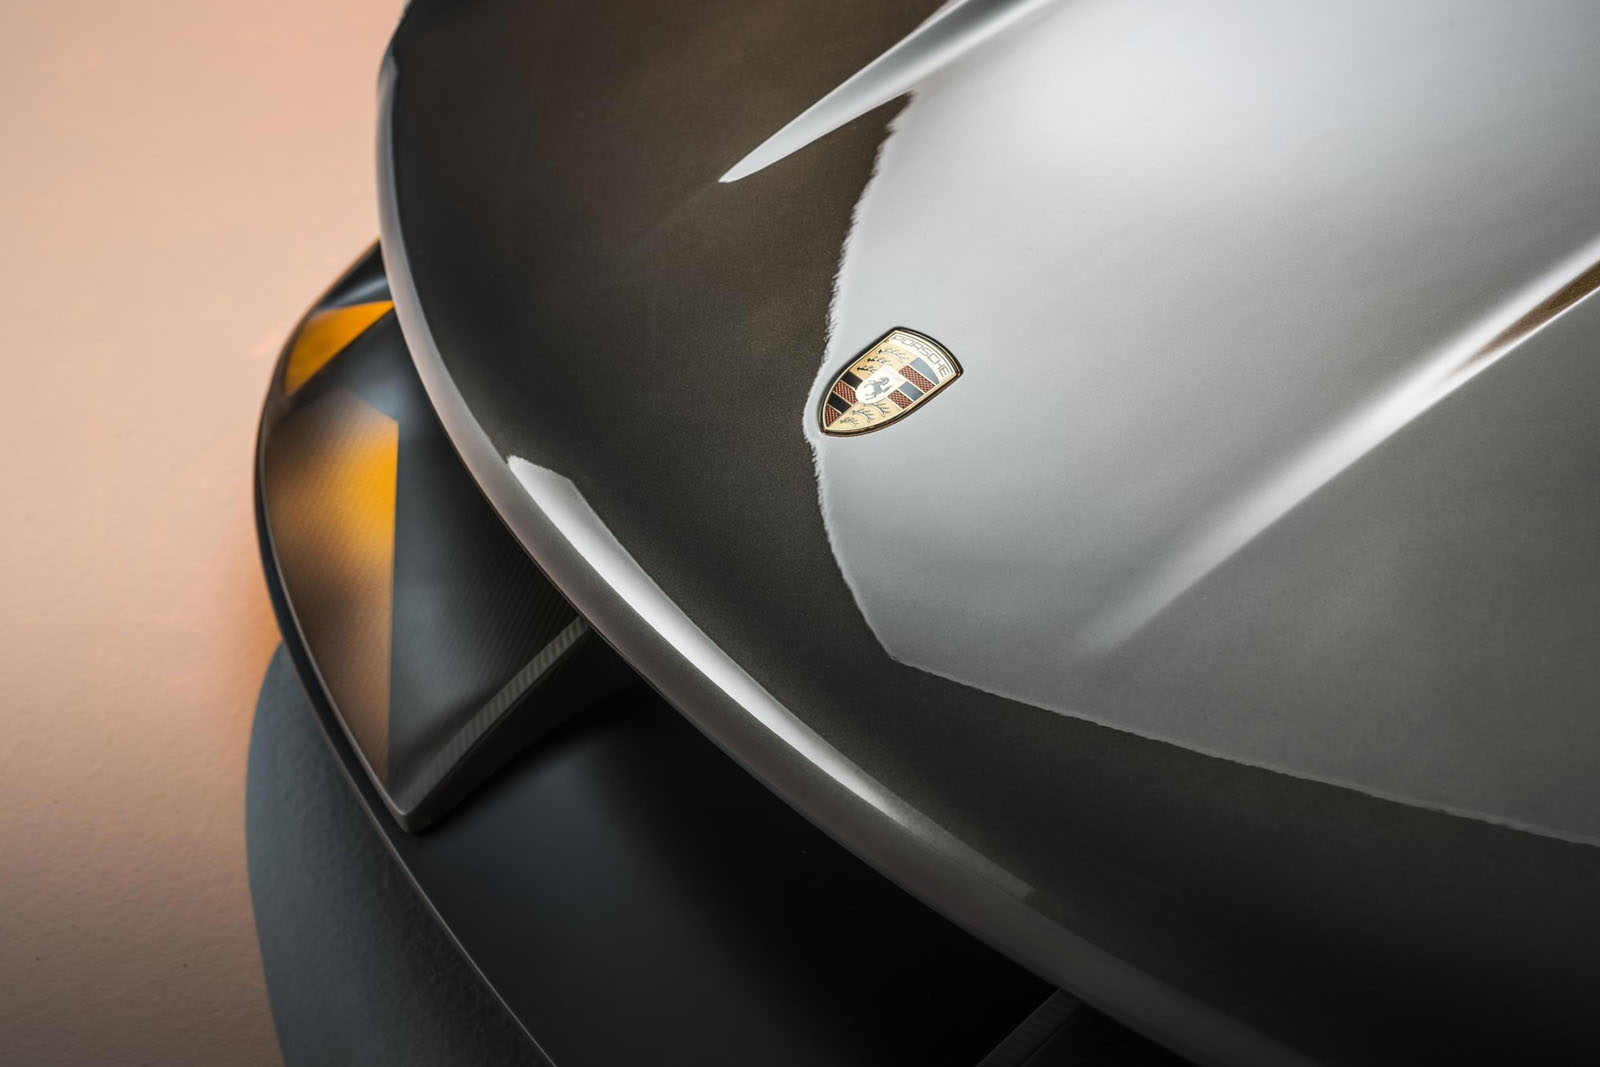 New Porsche Mission X concept is electric 918 Spyder successor